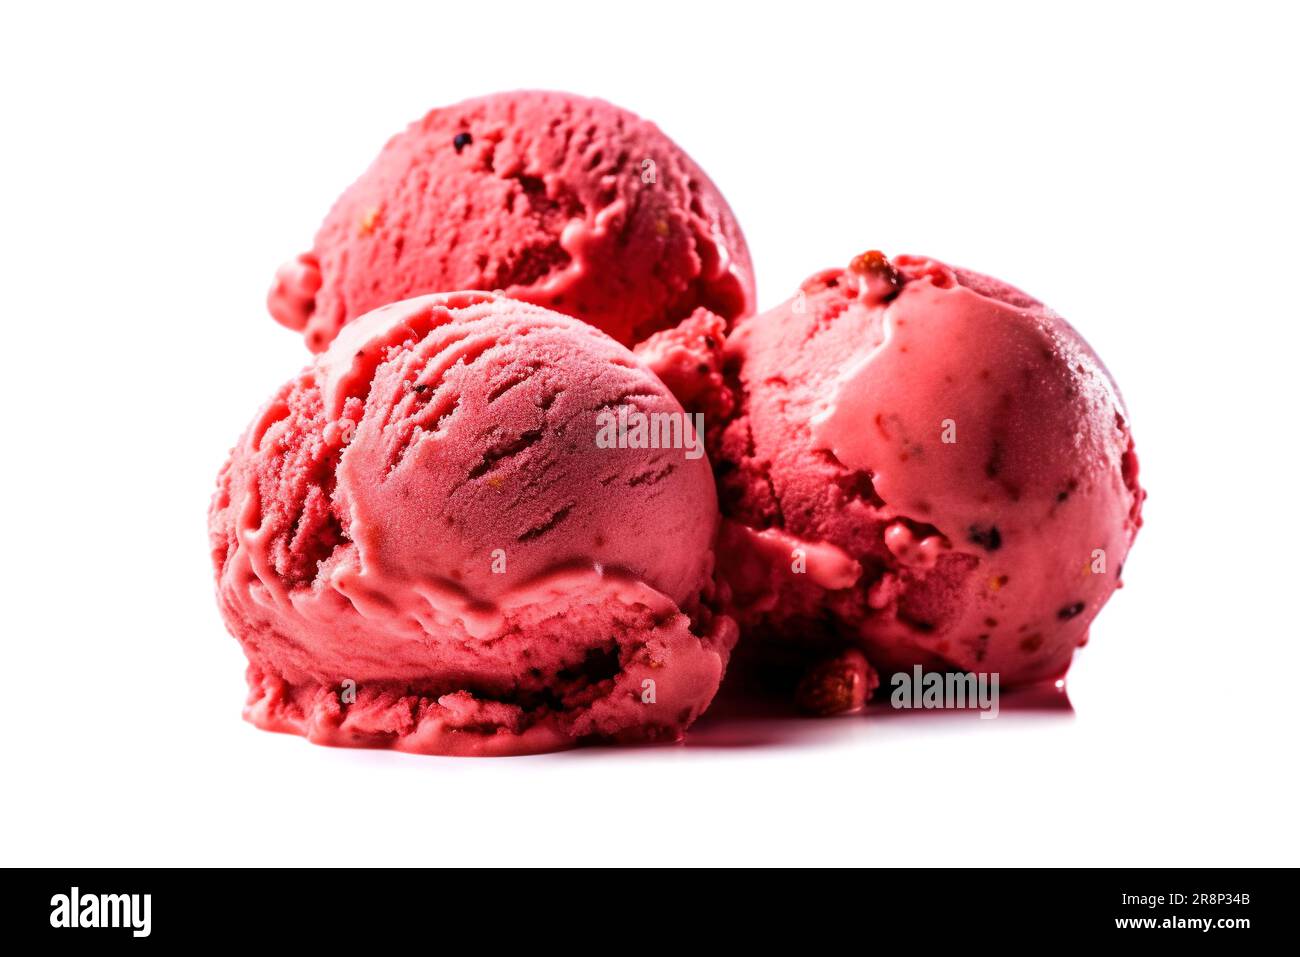 https://c8.alamy.com/comp/2R8P34B/scoop-of-cherry-or-strawberry-ice-cream-isolated-on-white-background-macro-2R8P34B.jpg